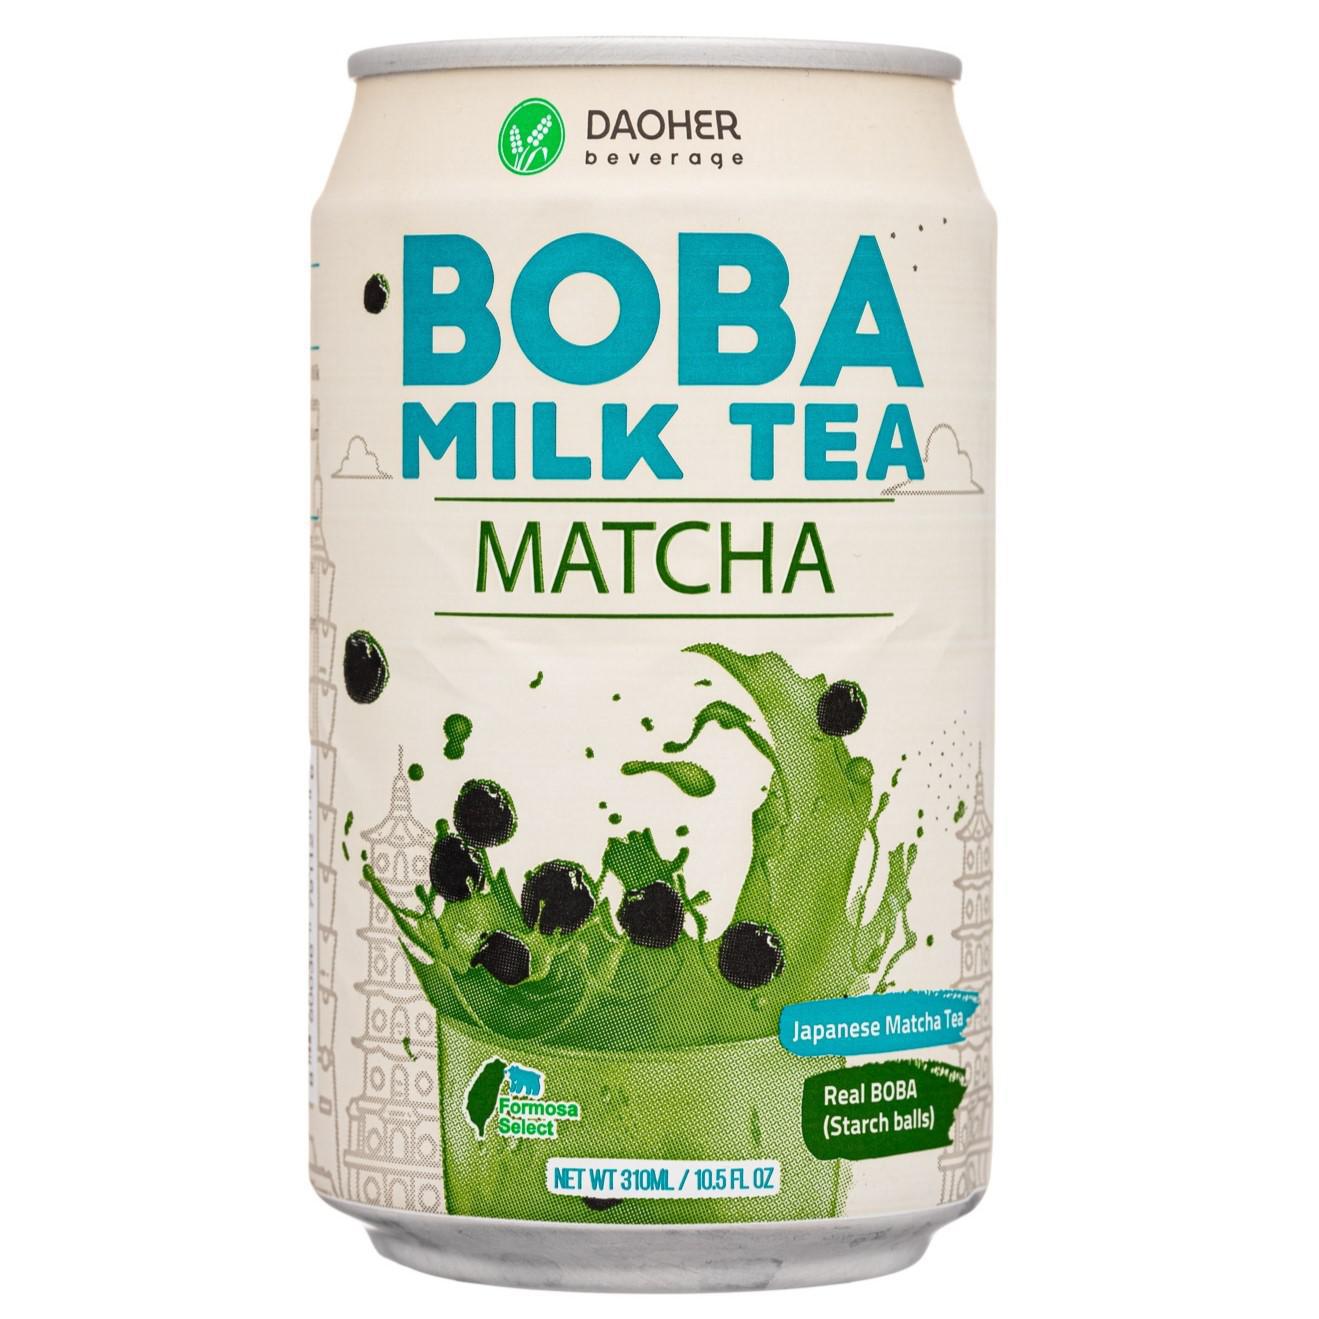 Daoher Beverage - 'Matcha' Boba Milk Tea (10.5oz)